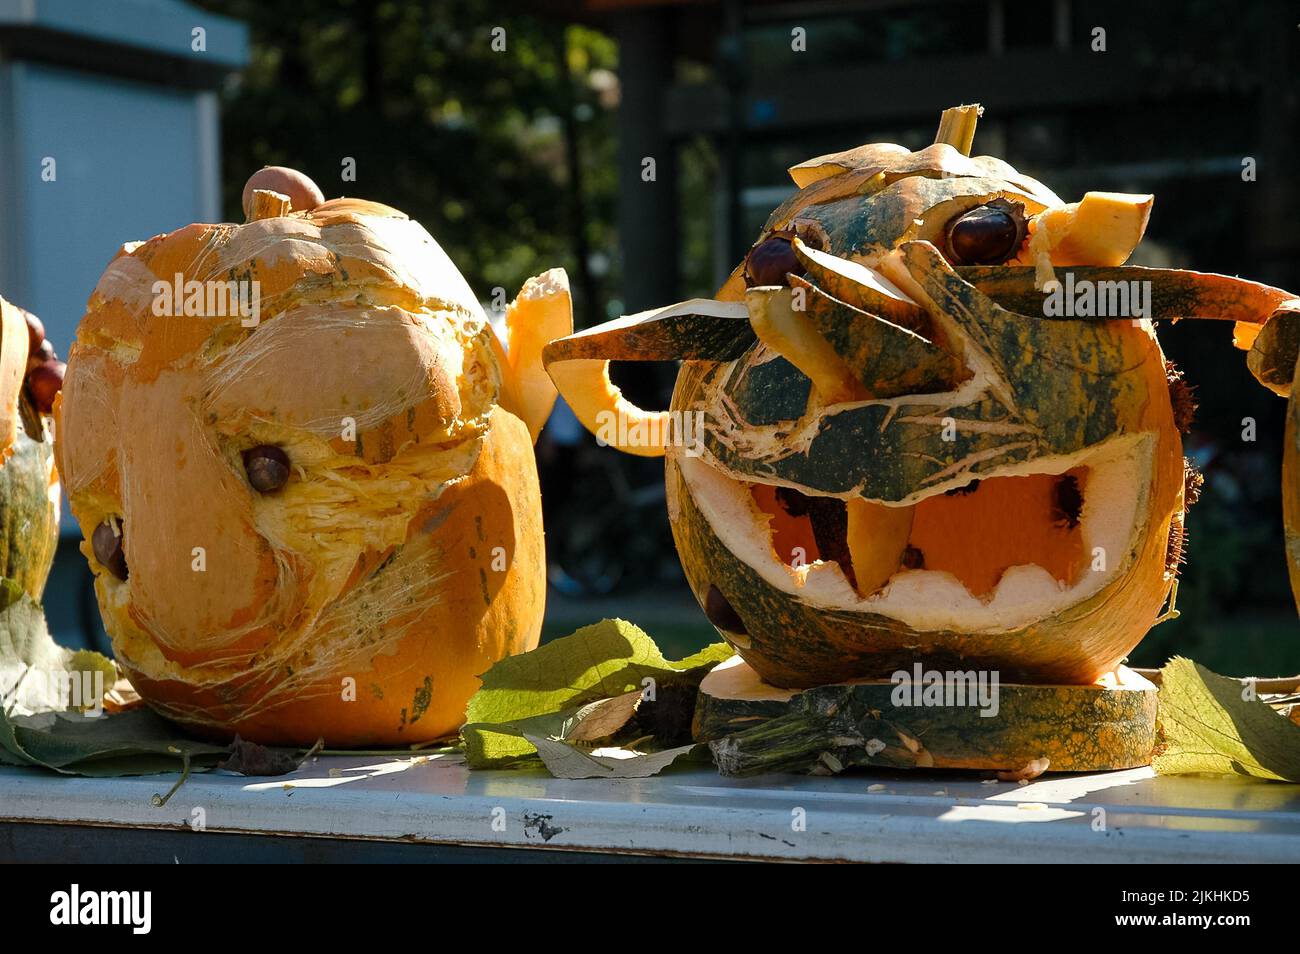 A close-up of funny Halloween pumpkins Stock Photo